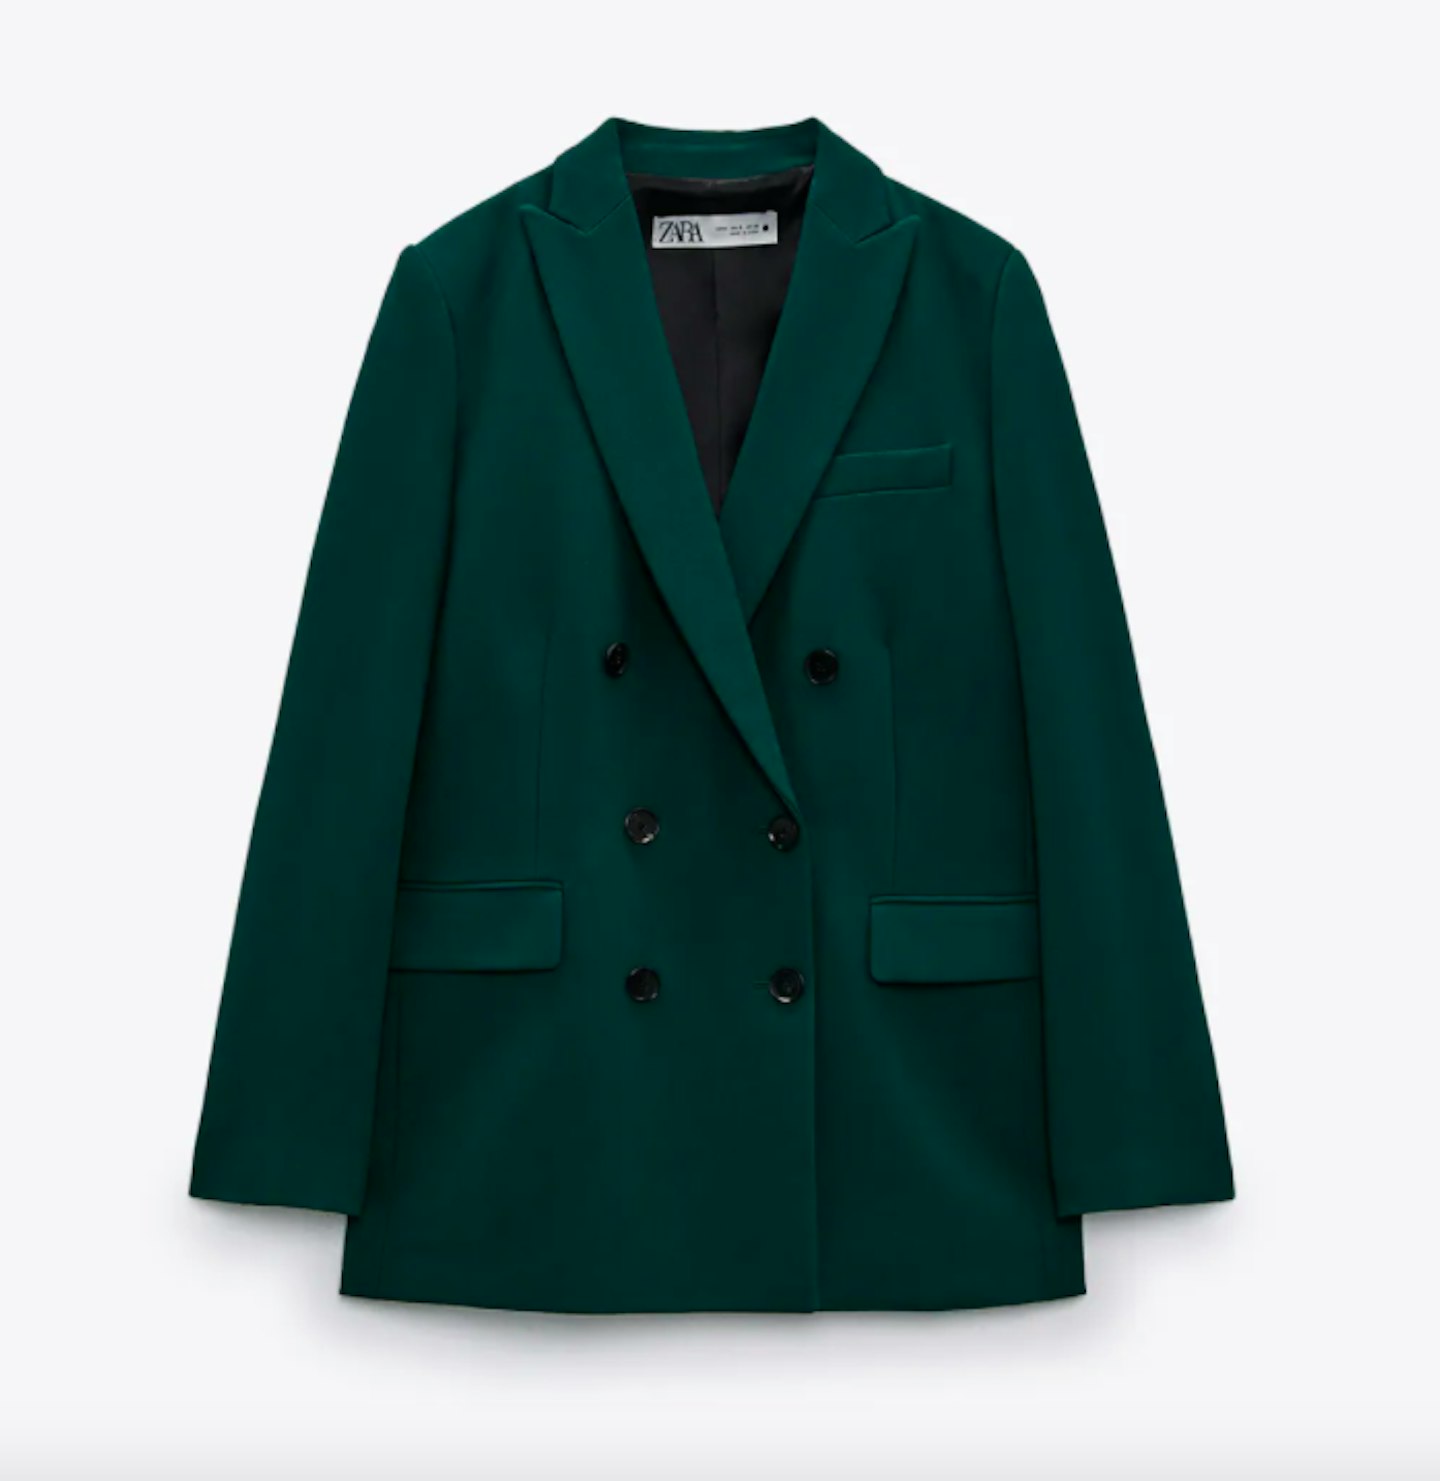 Zara, Tailored Double-Breasted Blazer, £69.99